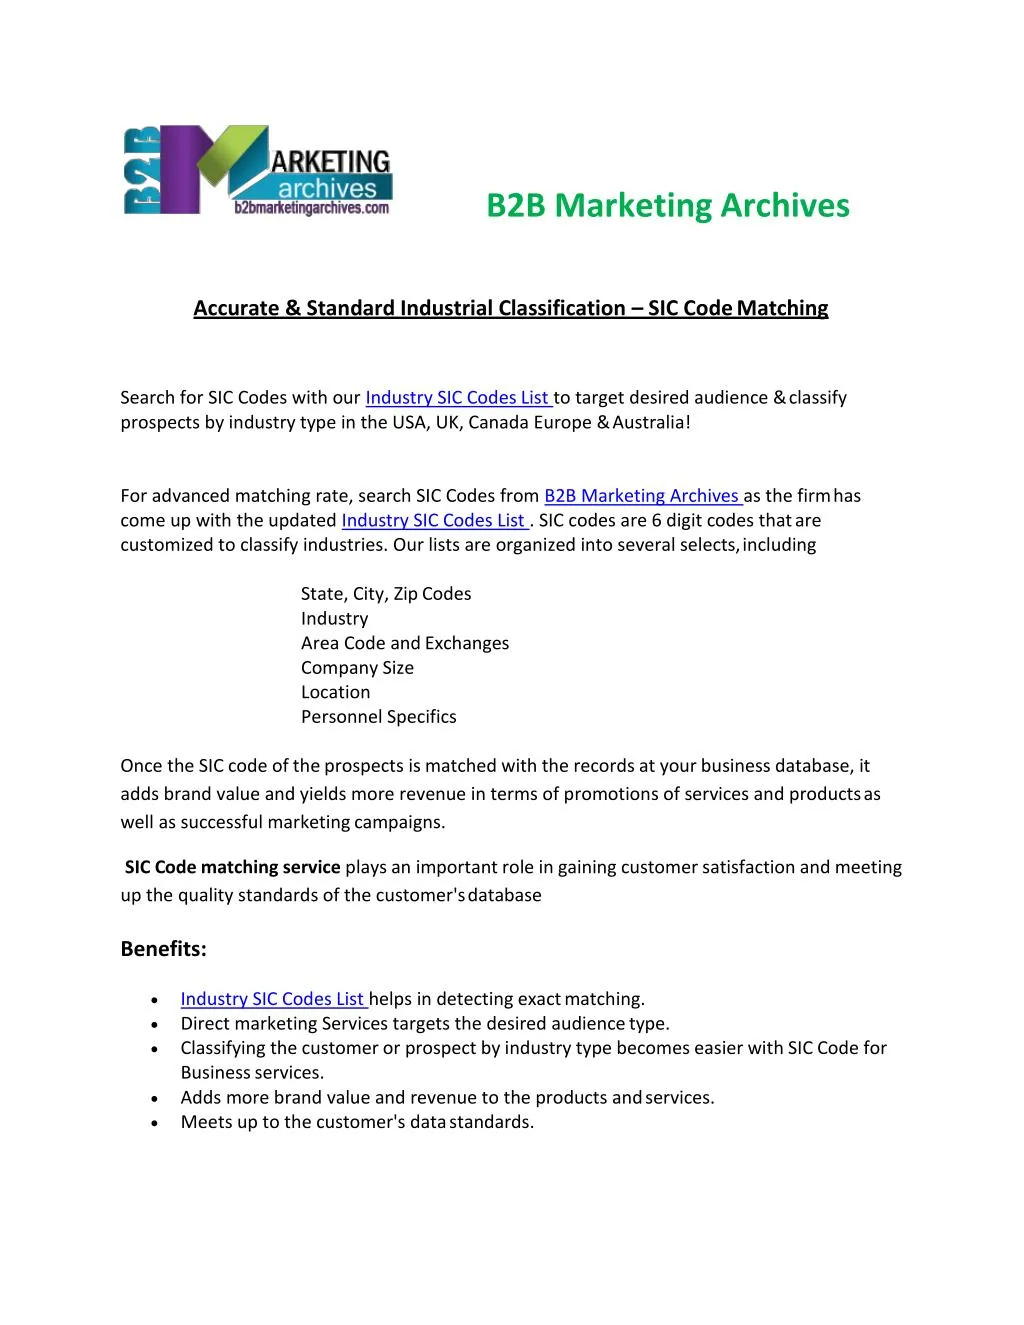 b2b marketing archives